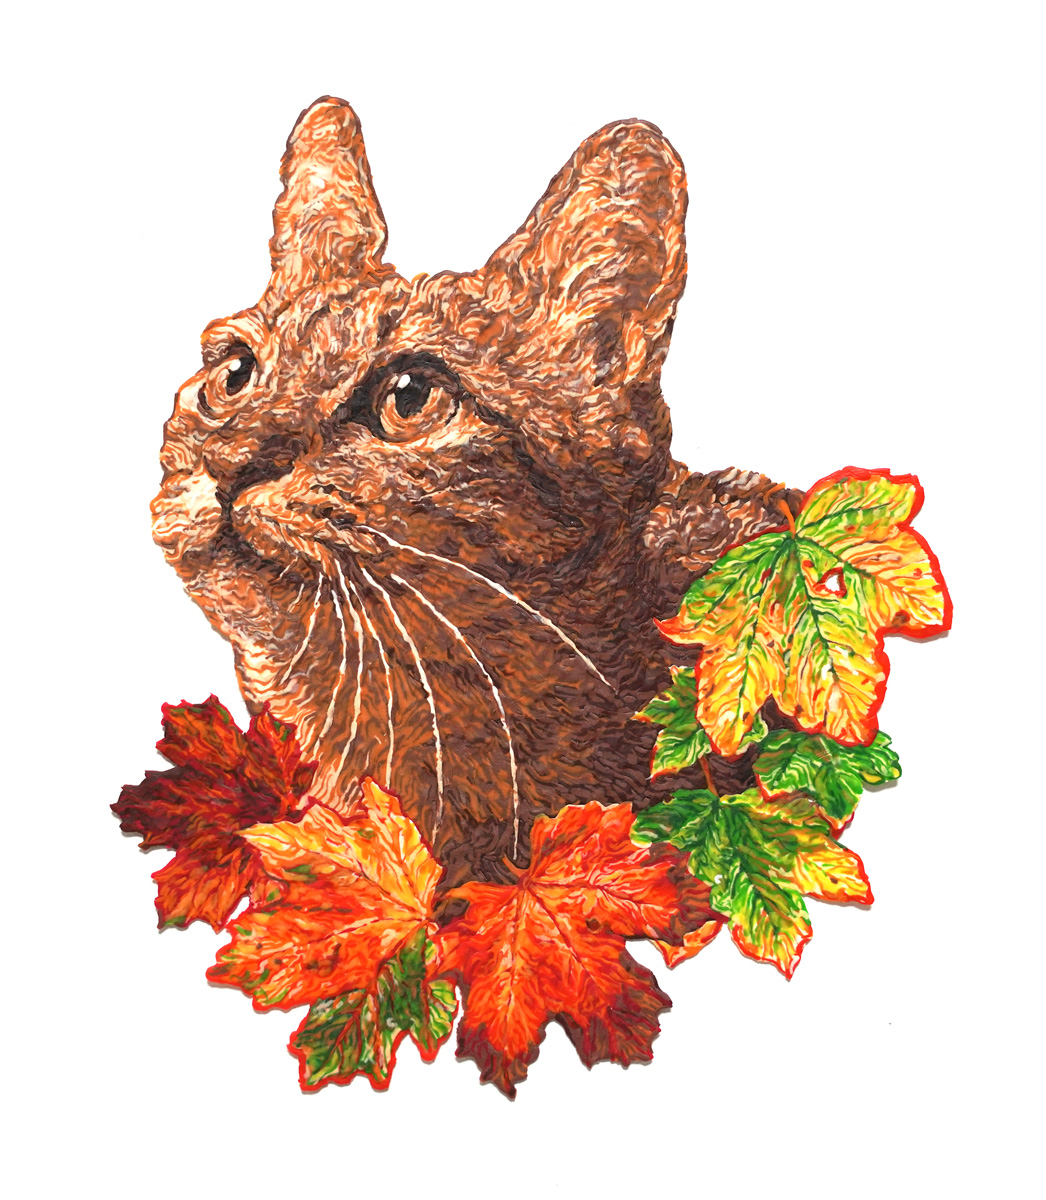 no humans white background simple background animal focus leaf animal cat  illustration images